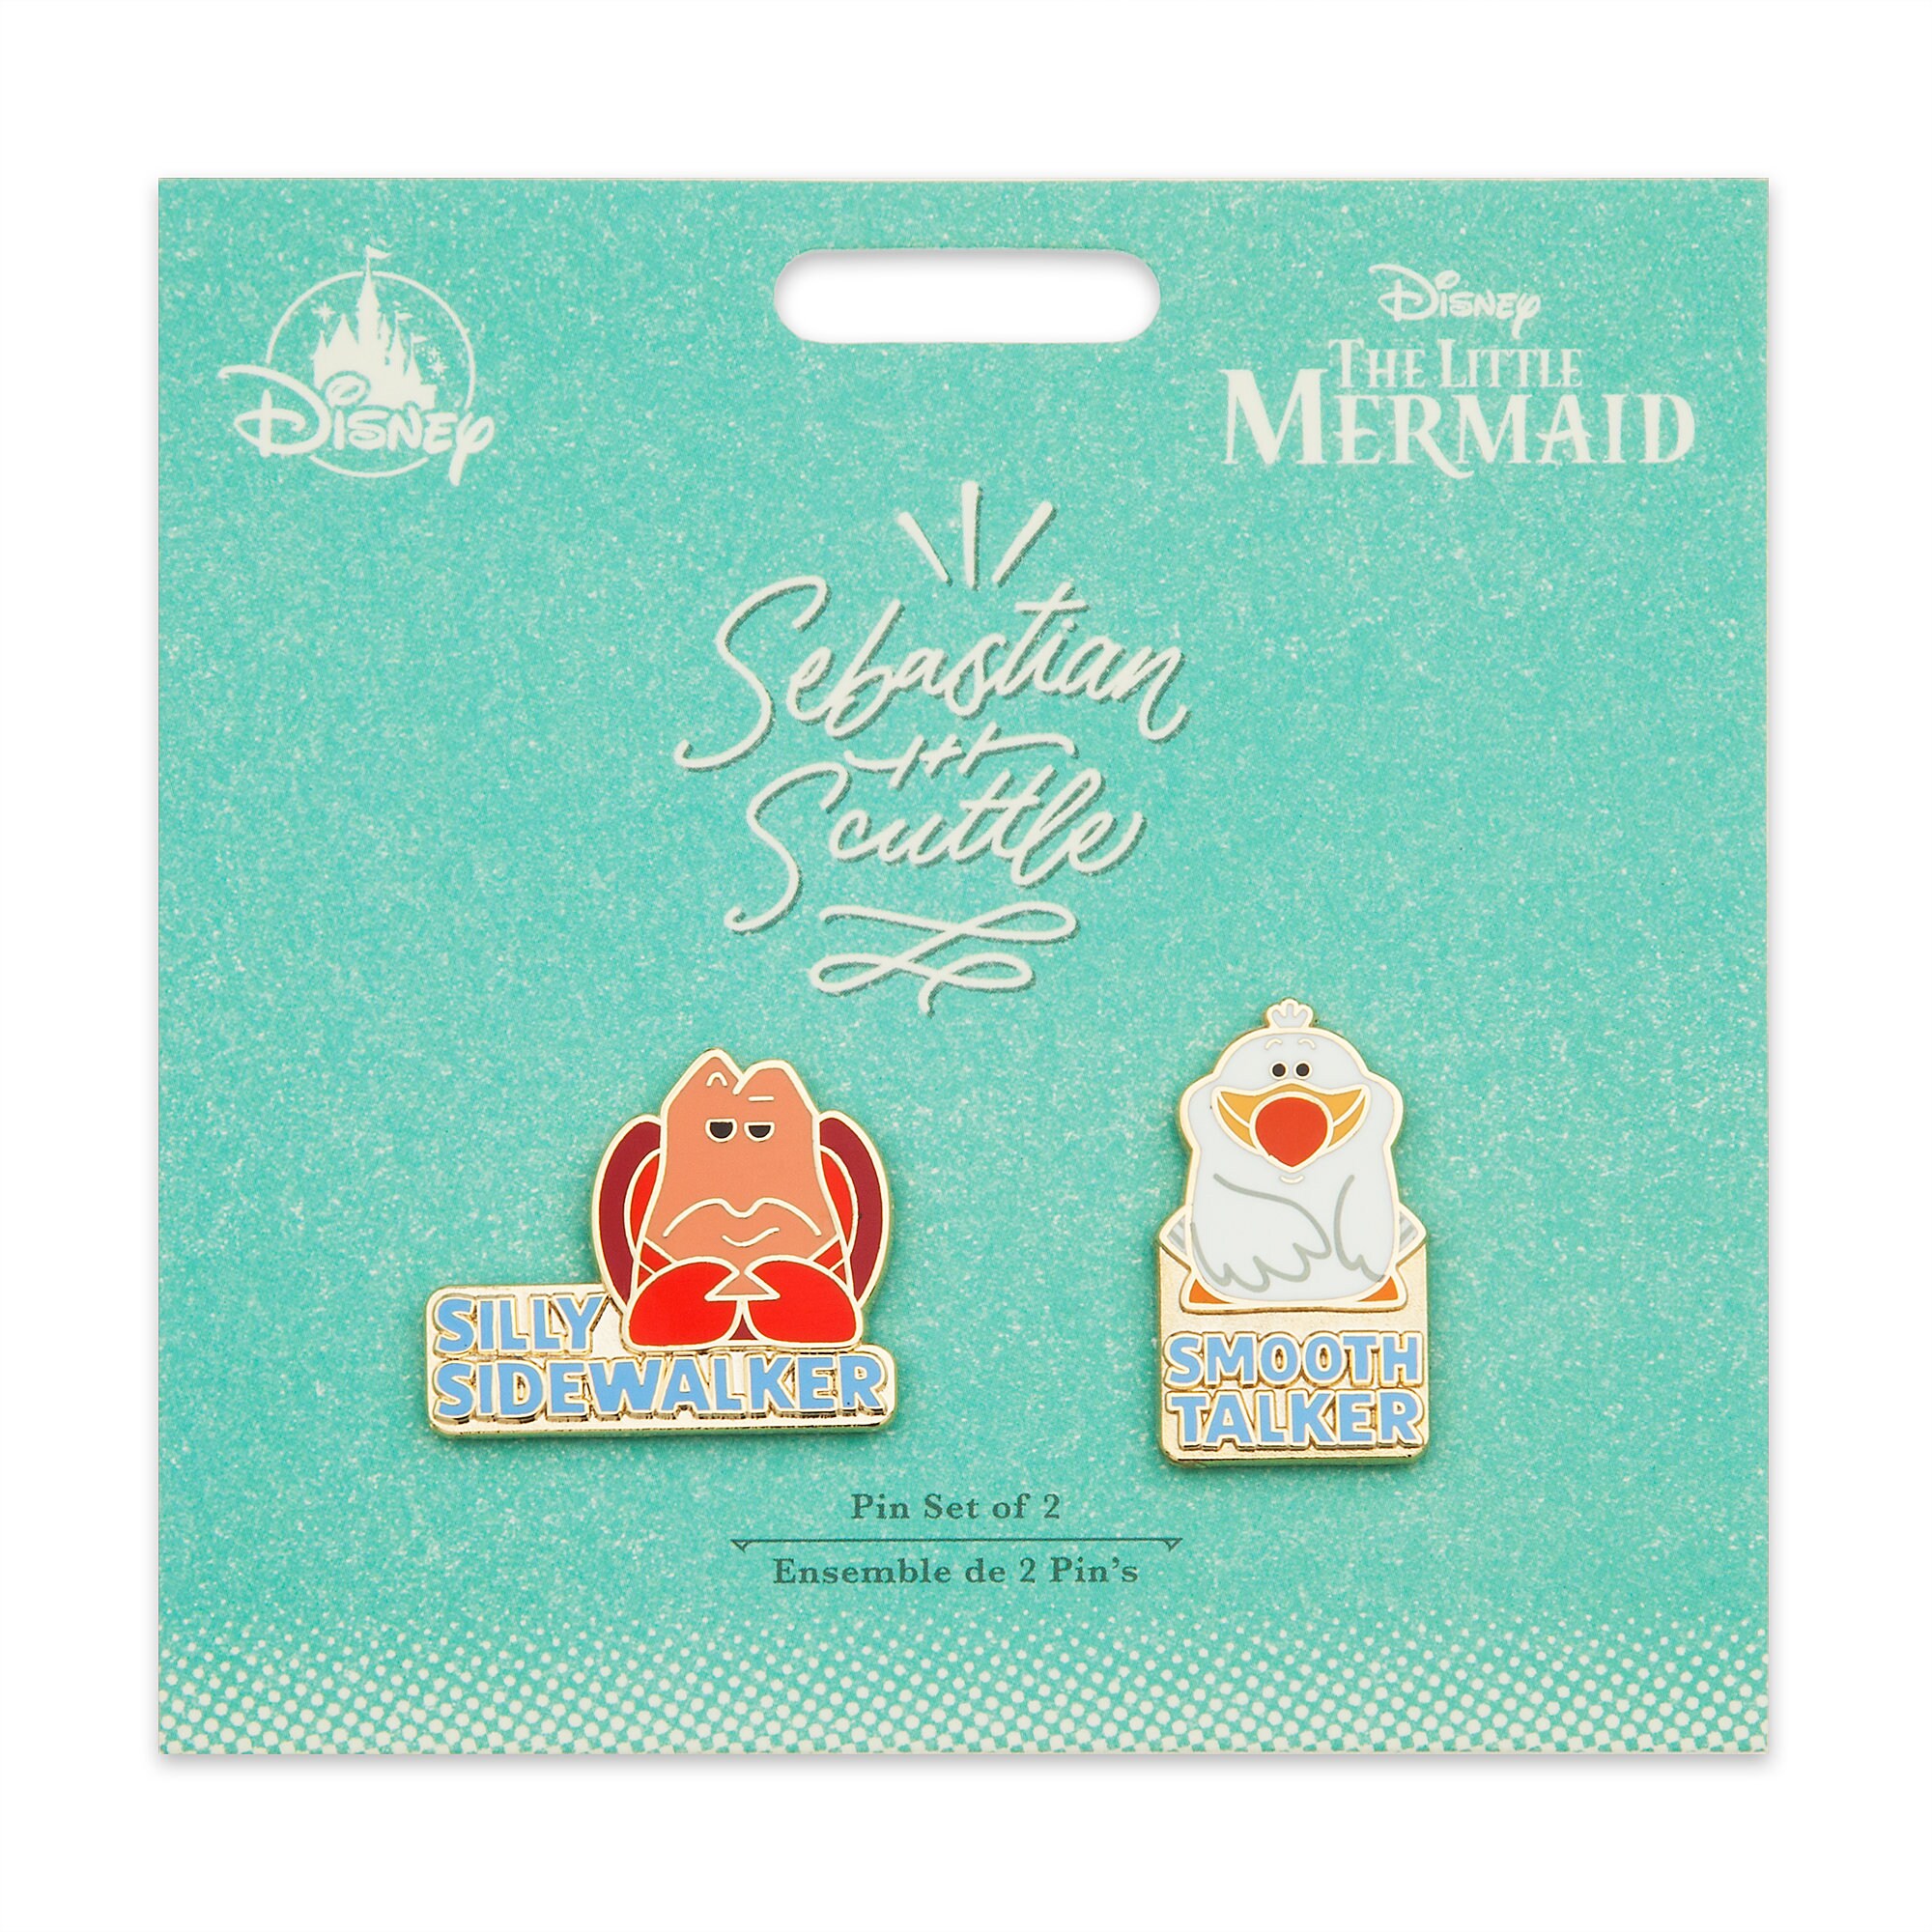 Sebastian and Scuttle Pin Set - The Little Mermaid